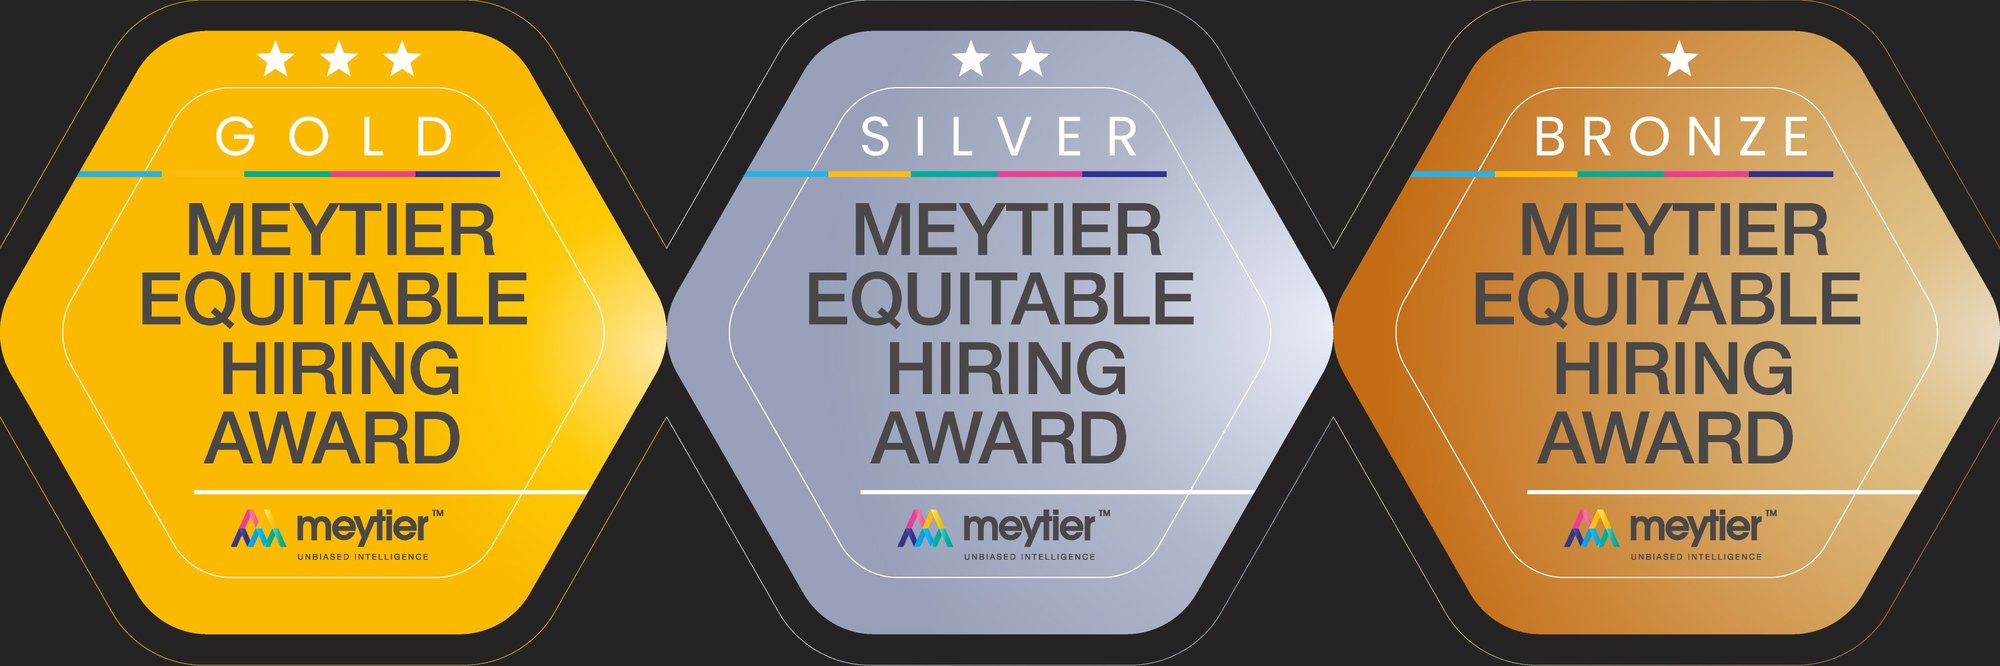 Meytier-Award-GSB-2